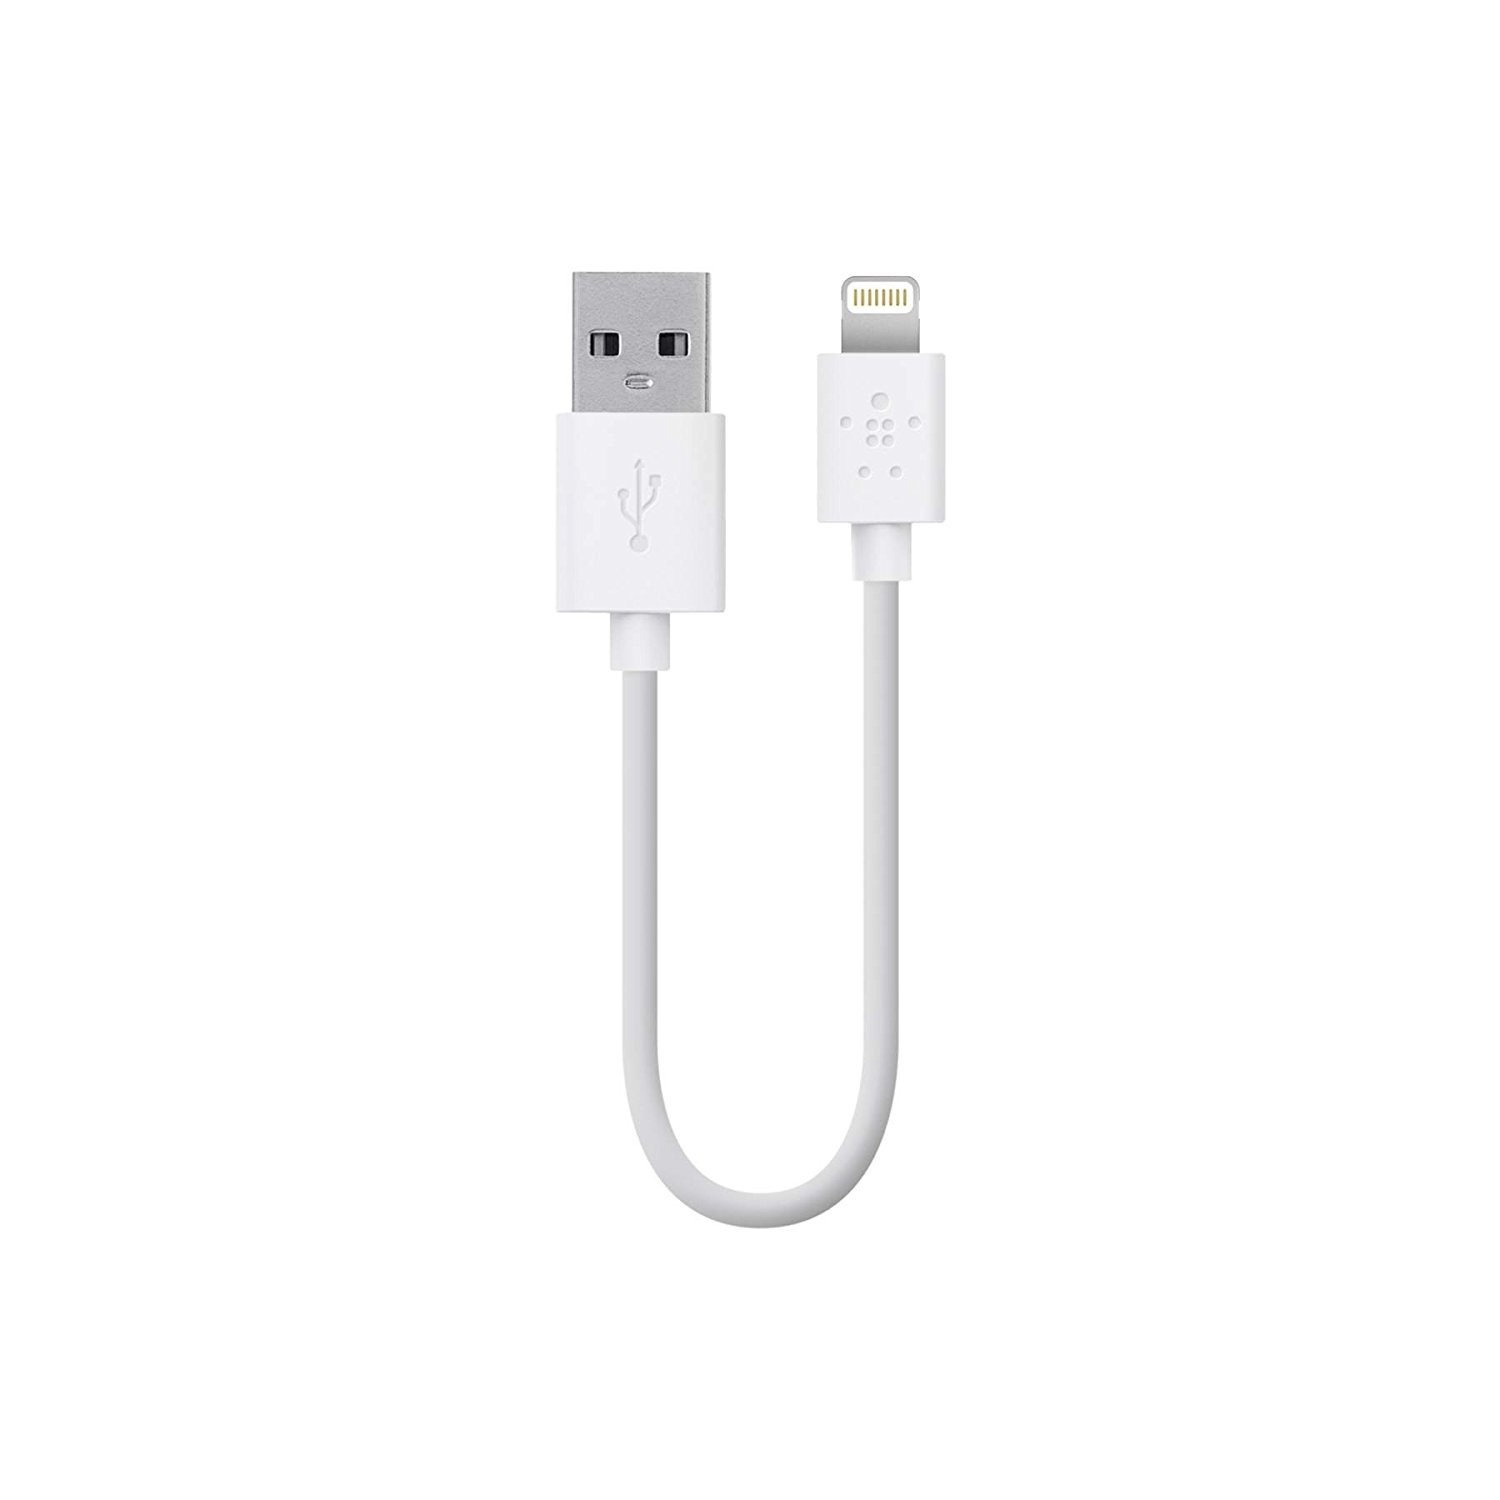 Belkin Apple certificado MIXIT Lightning a cable USB, 6 pulgadas (blanco)